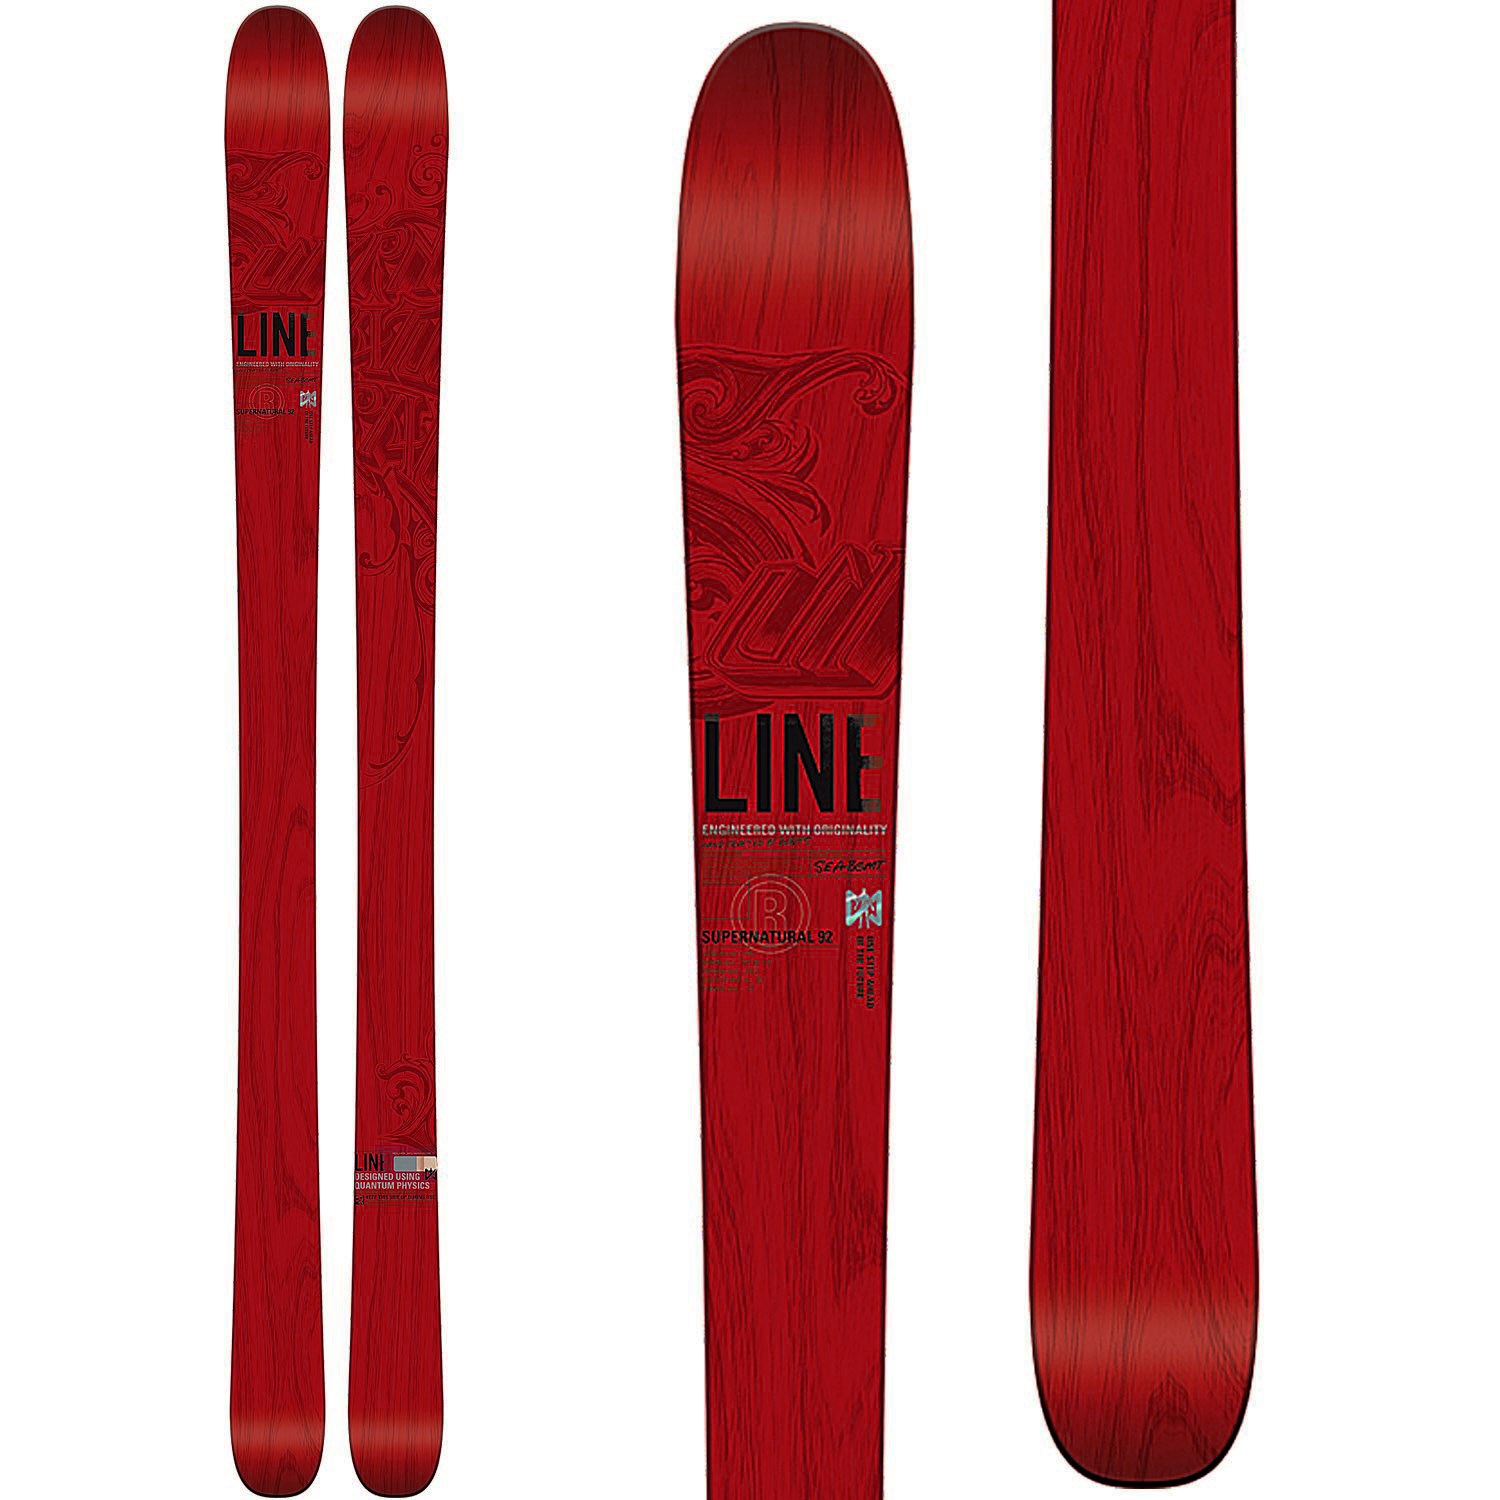 Line Skis Supernatural 92 Skis 2015 | evo